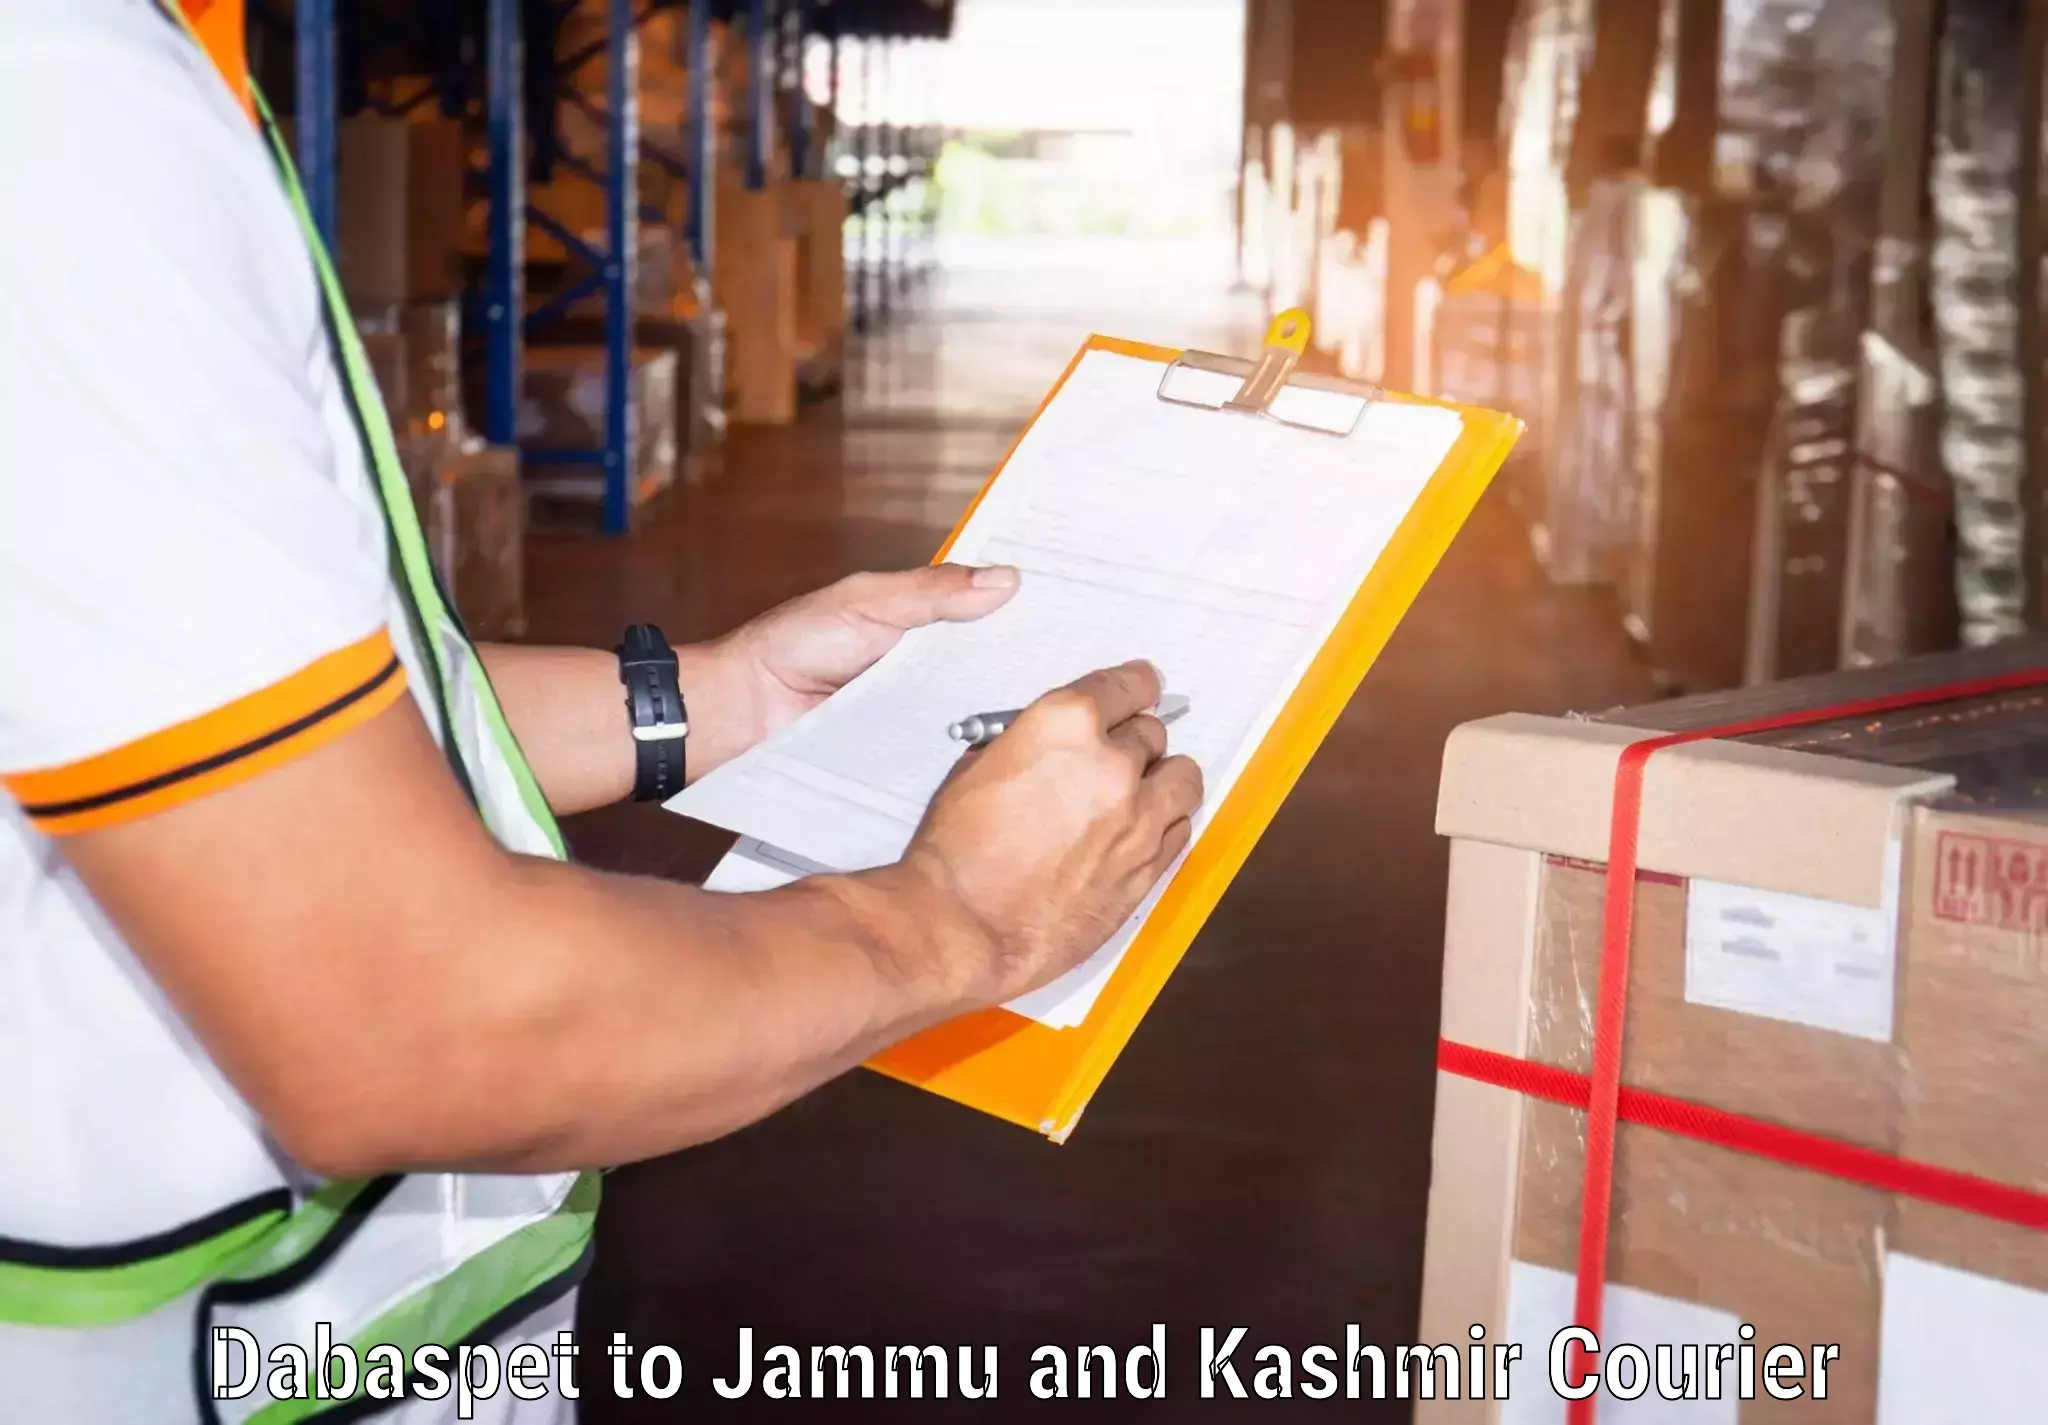 Next-day delivery options Dabaspet to Srinagar Kashmir